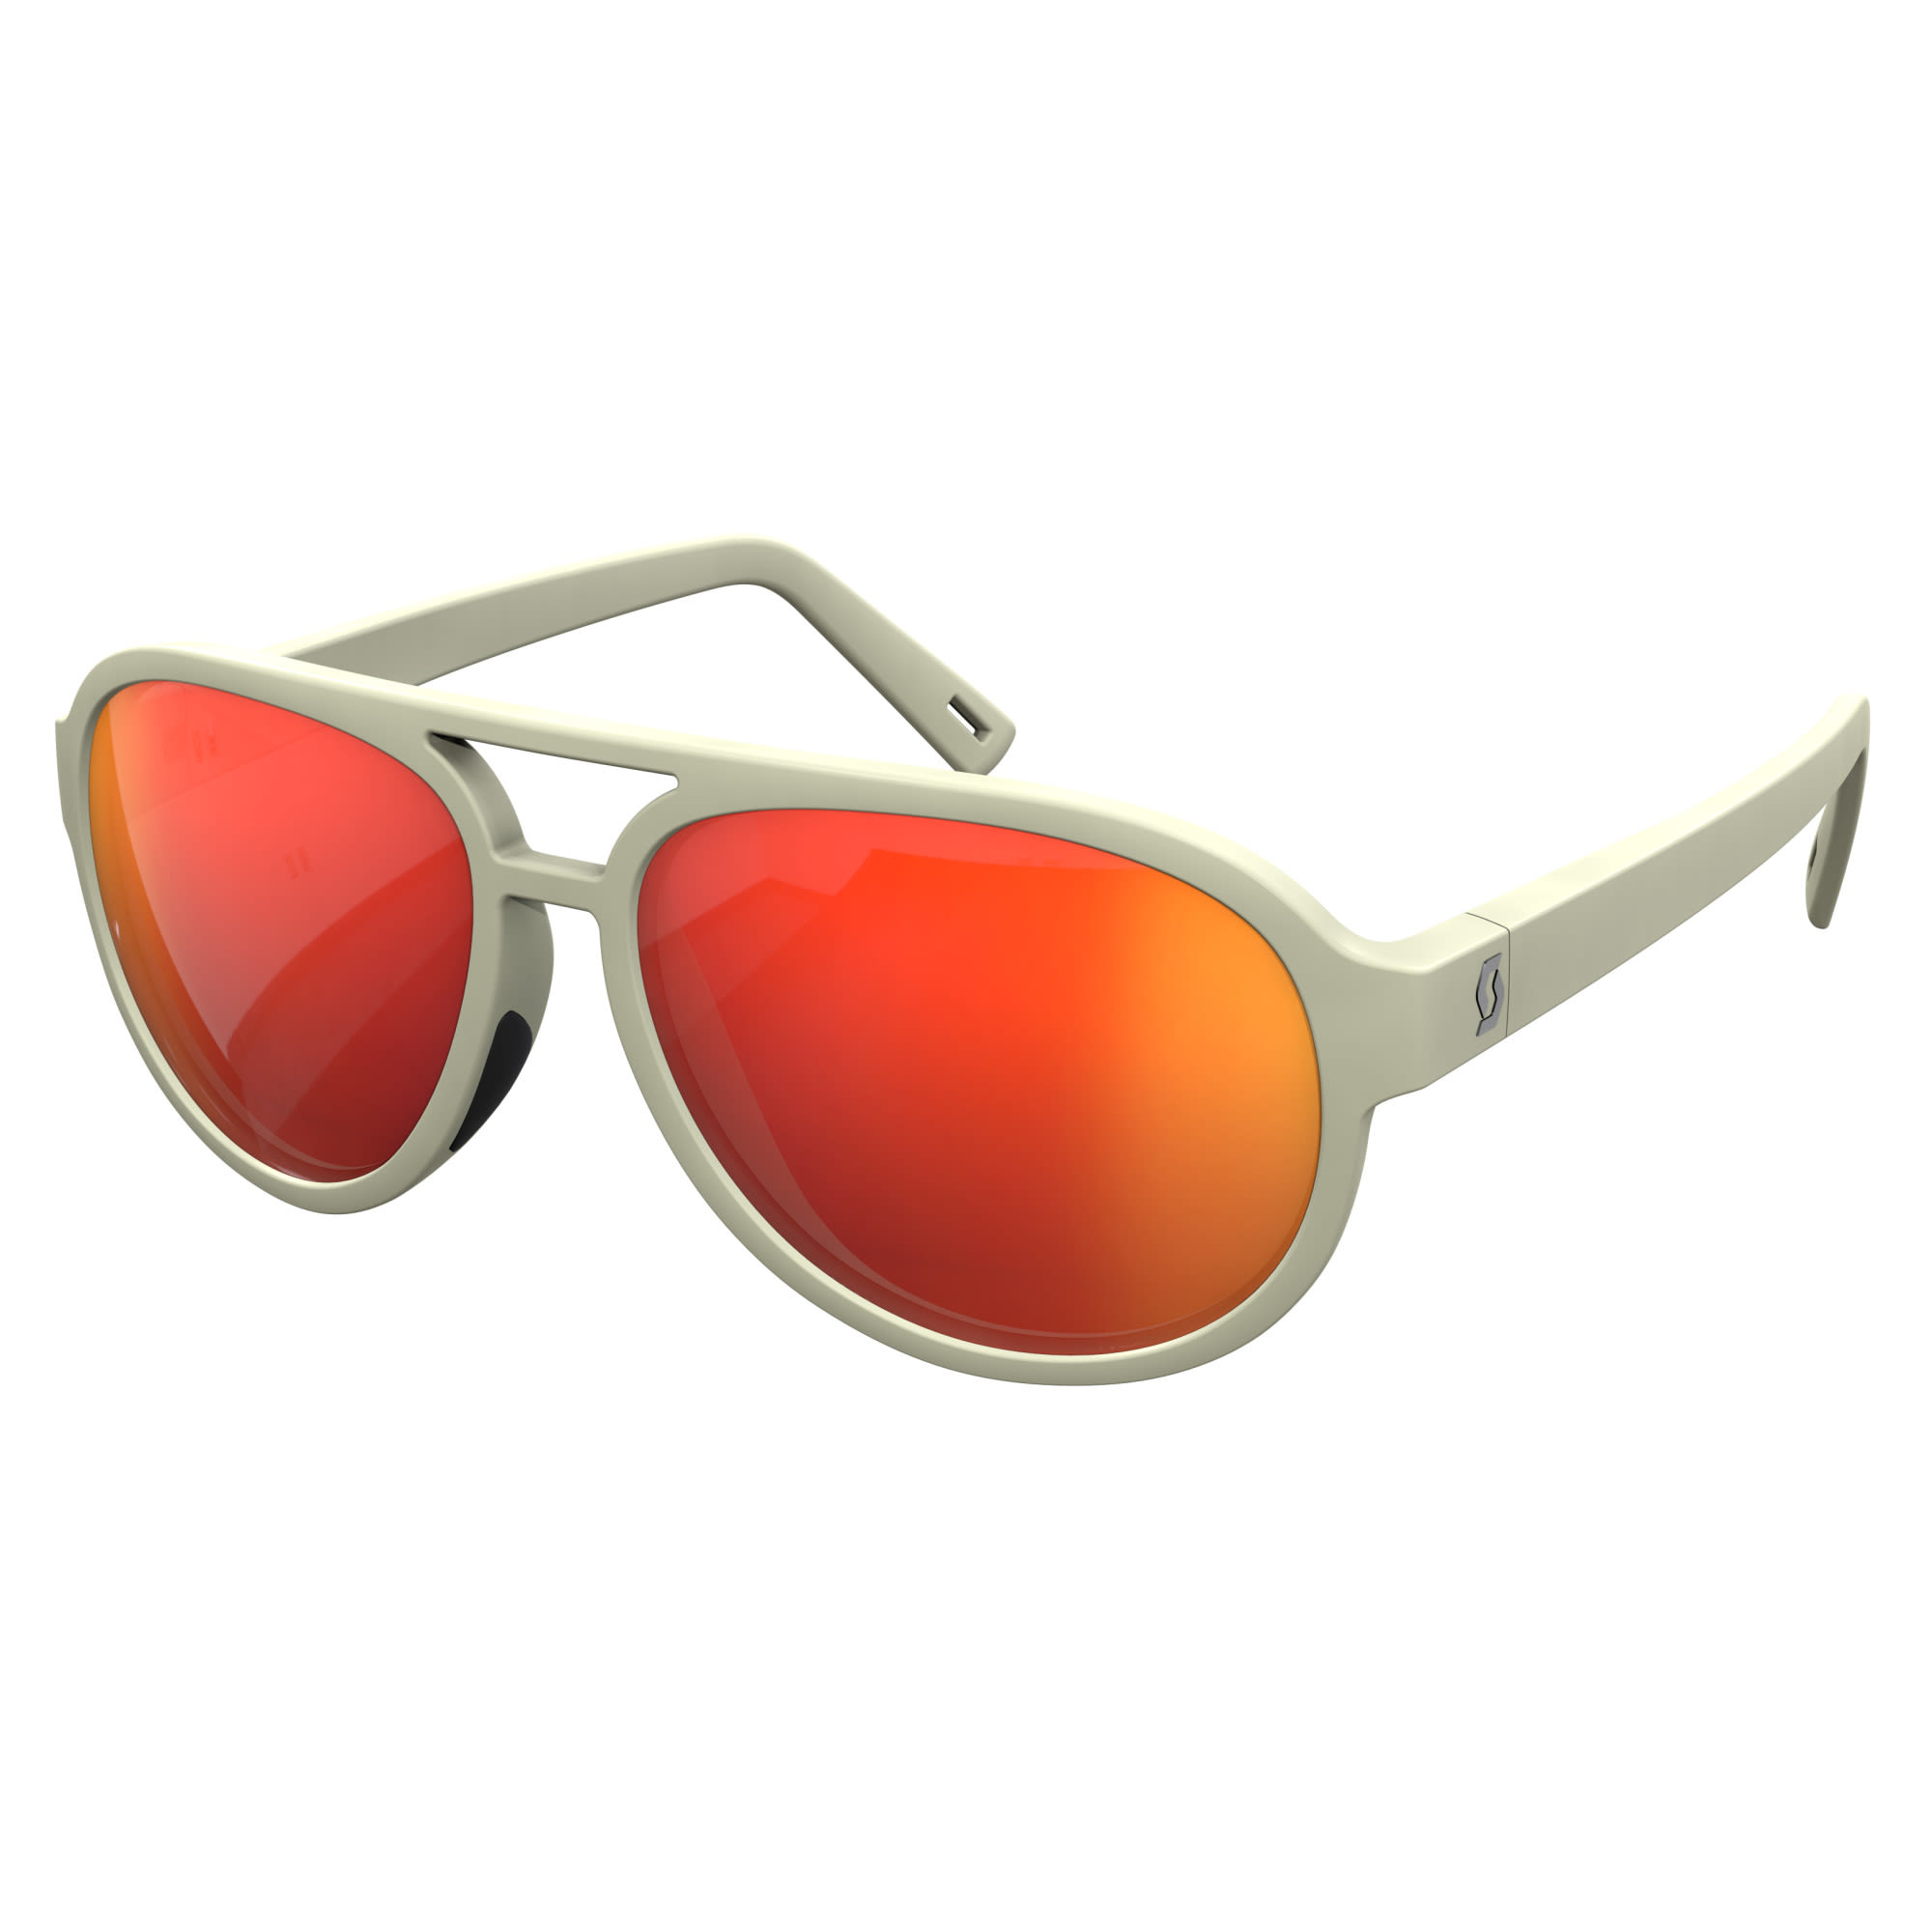 Scott Bass Sunglasses Beige | Größe One Size |  Accessoires